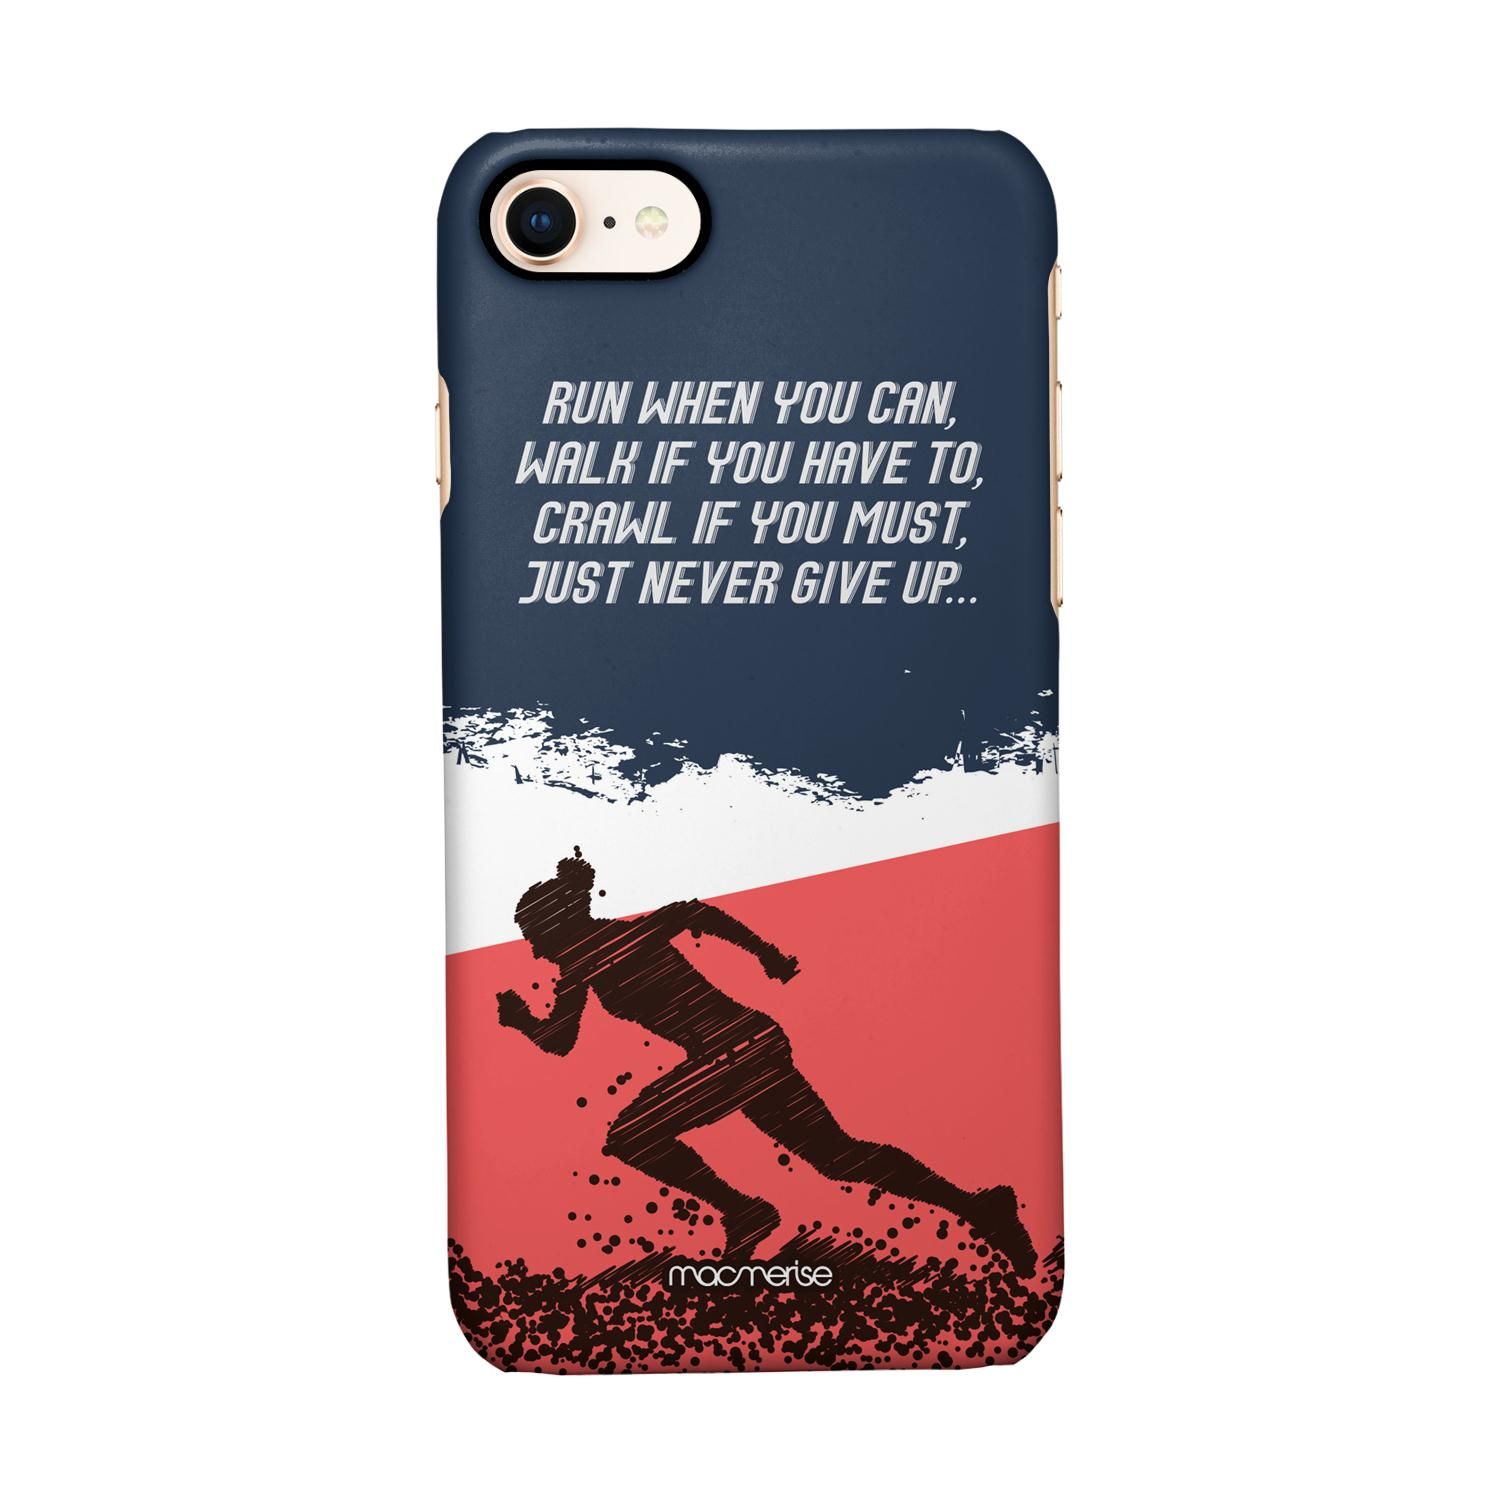 Buy Running Motivation - Sleek Phone Case for iPhone 7 Online